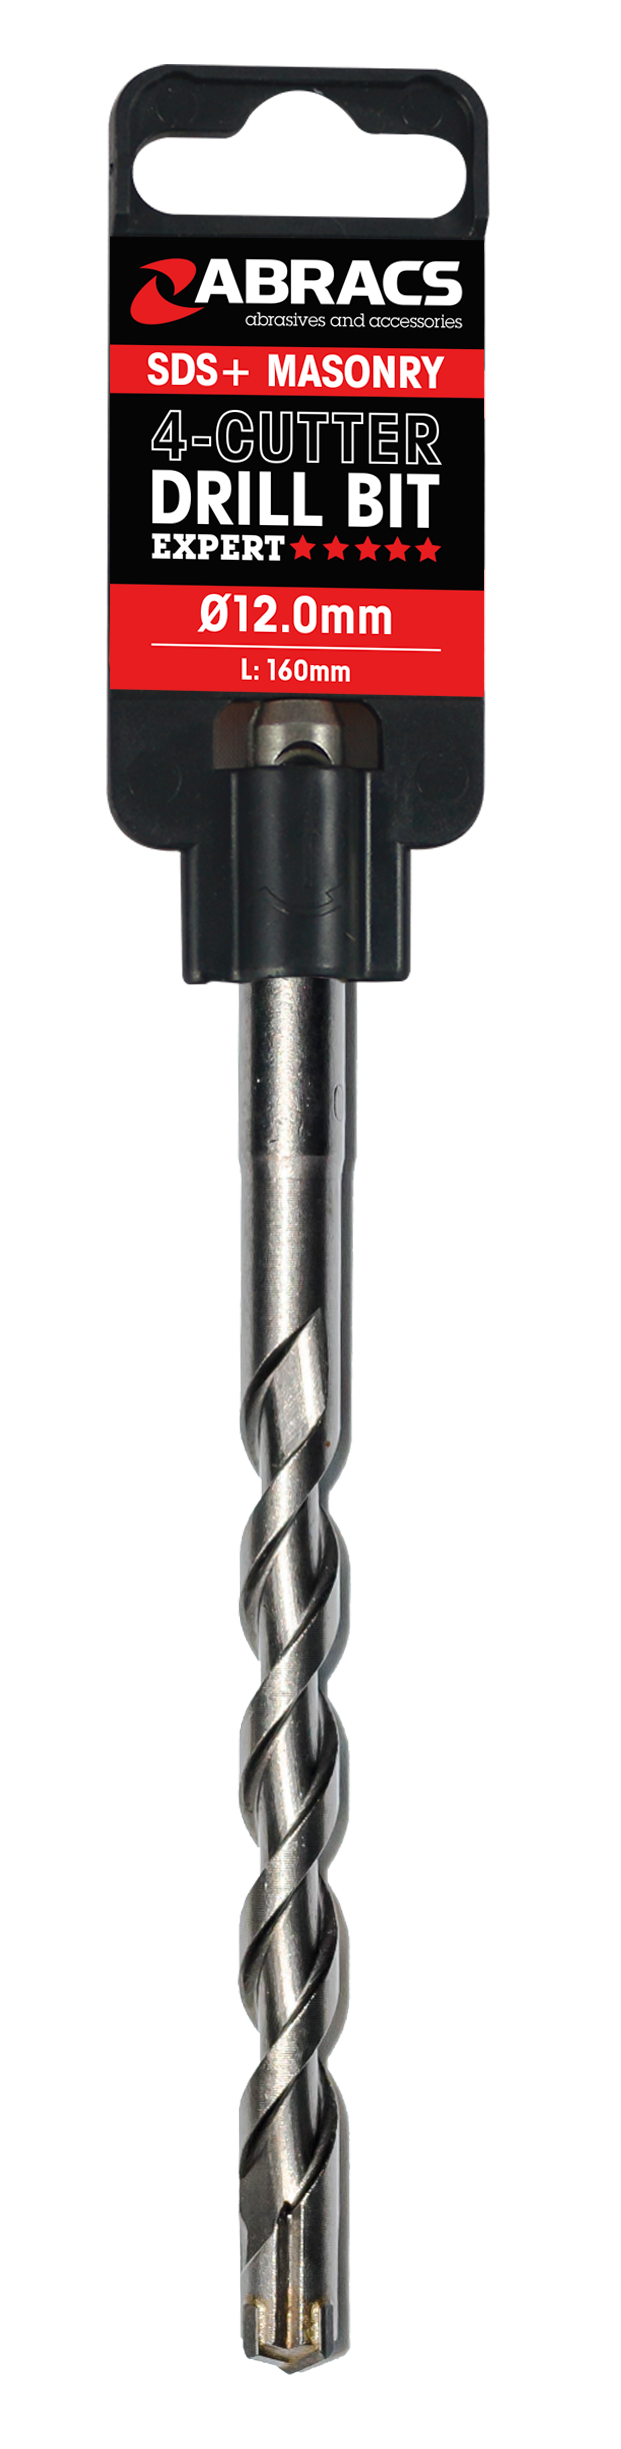 DBCX100160 10.0mm x 160mm SDS+ Masonry Drill Bit - 4 Cutter